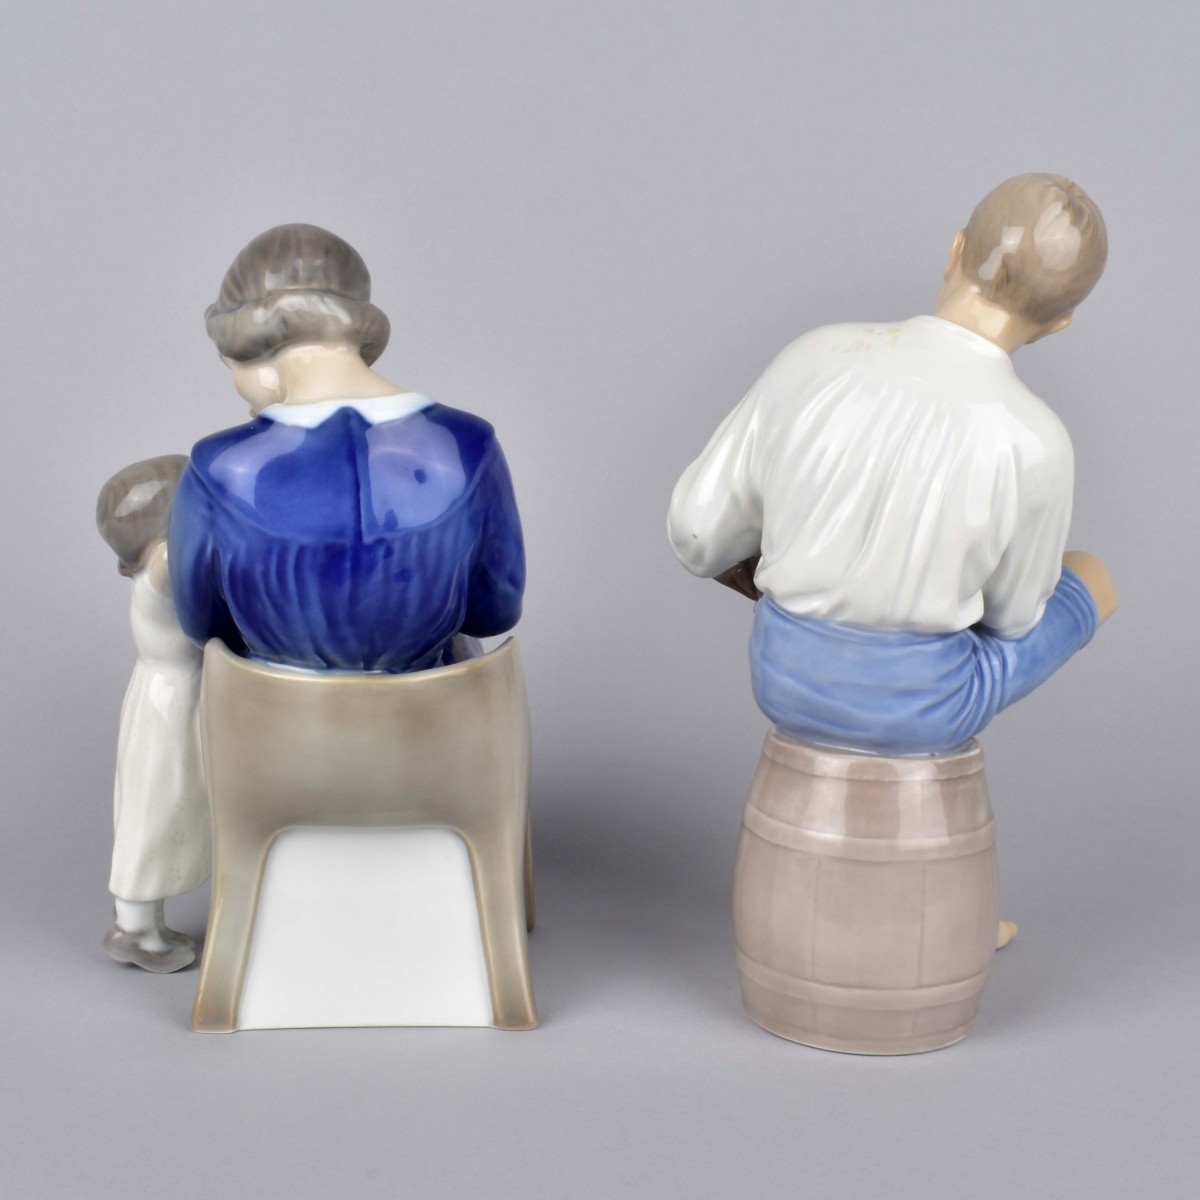 Two Bing & Grondahl (B&G) Porcelain Figurines